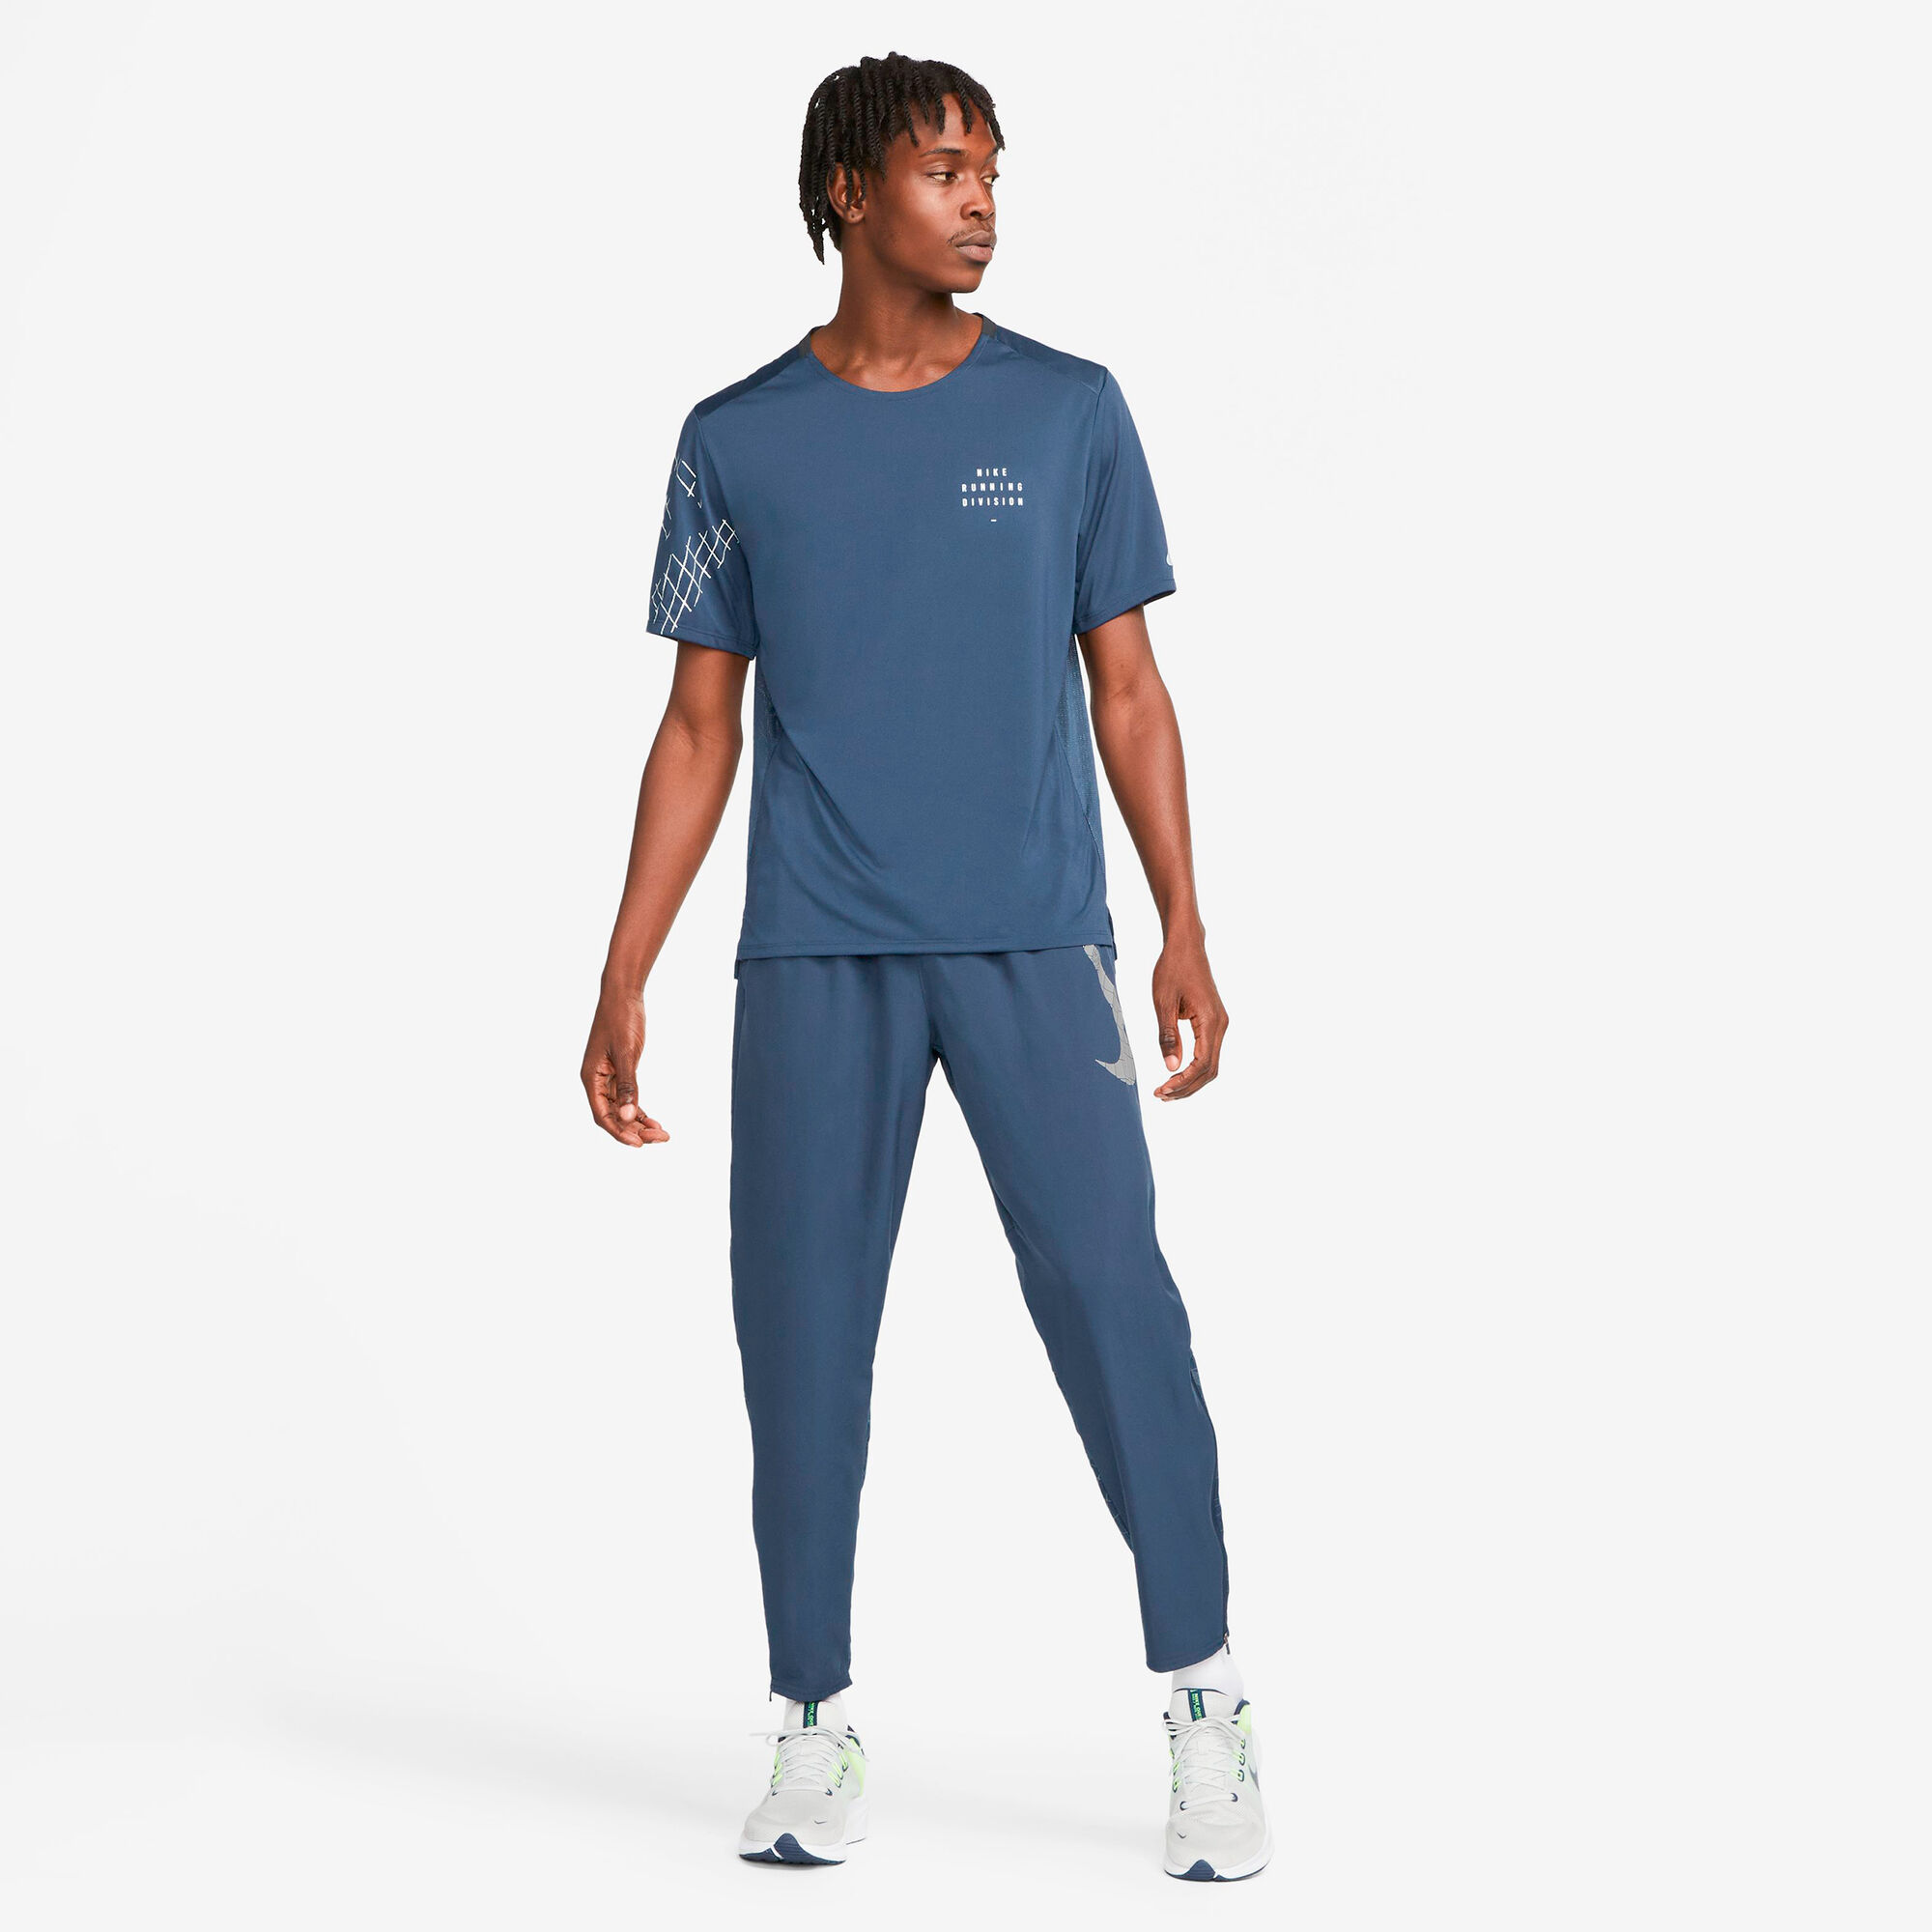 Nike Dri-FIT Run Division Challenger Woven Flash Running Pants